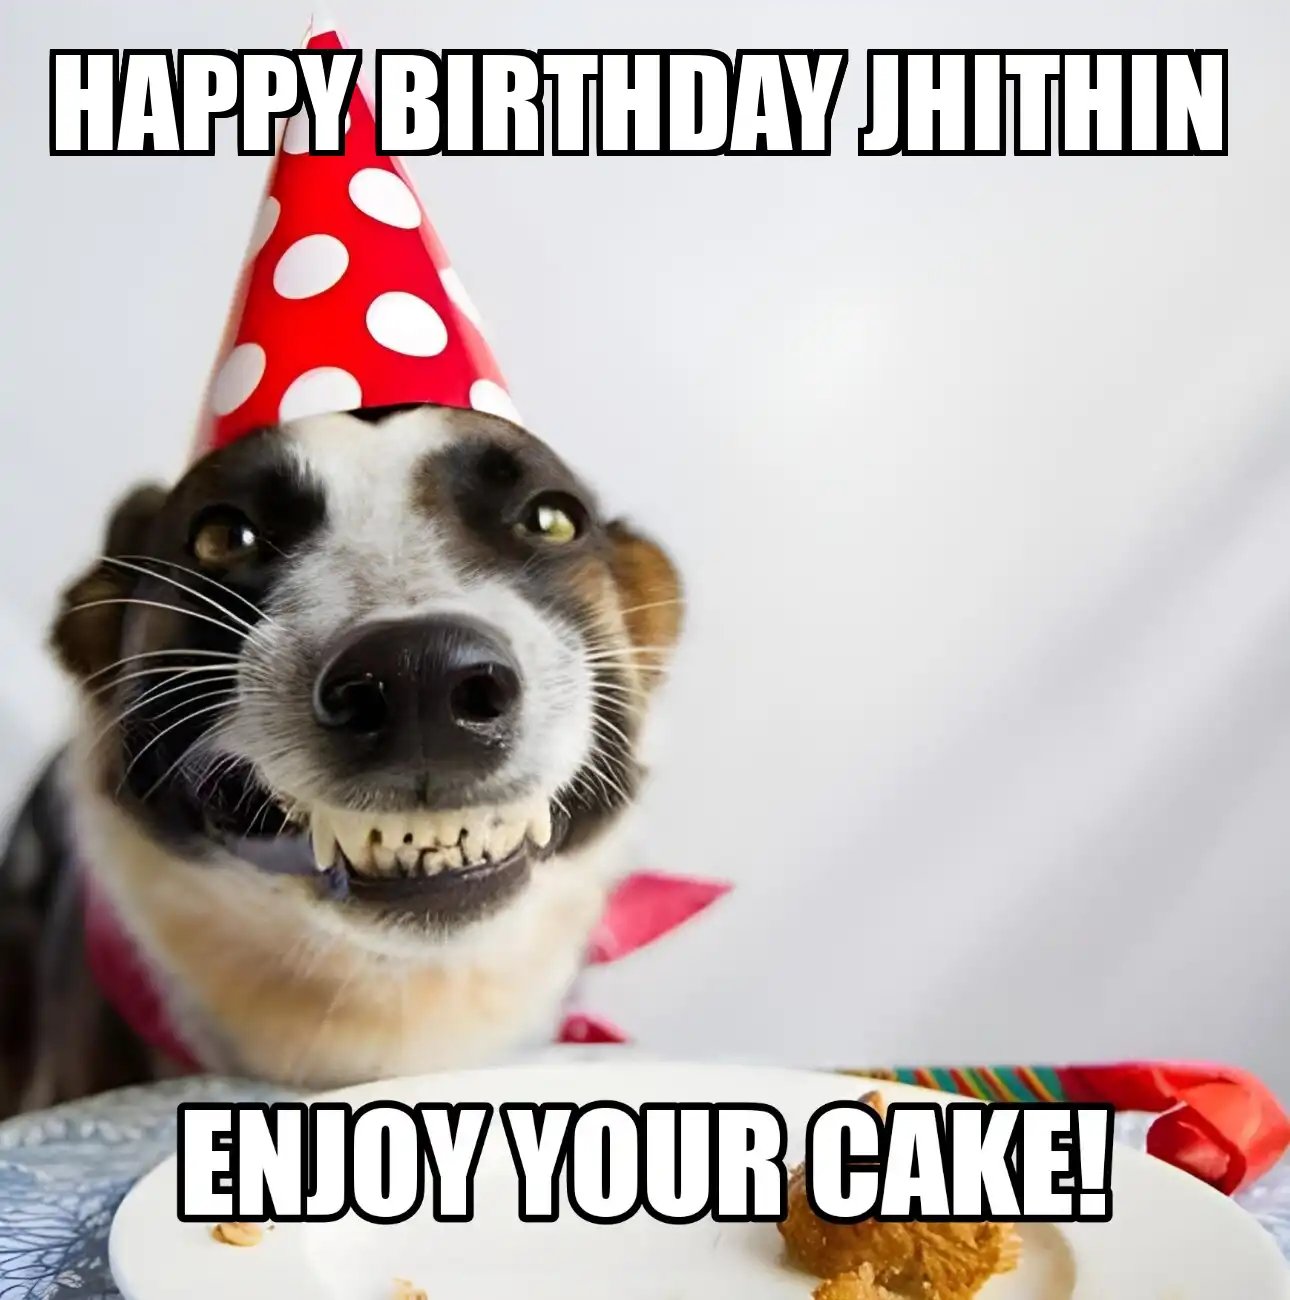 Happy Birthday Jhithin Enjoy Your Cake Dog Meme